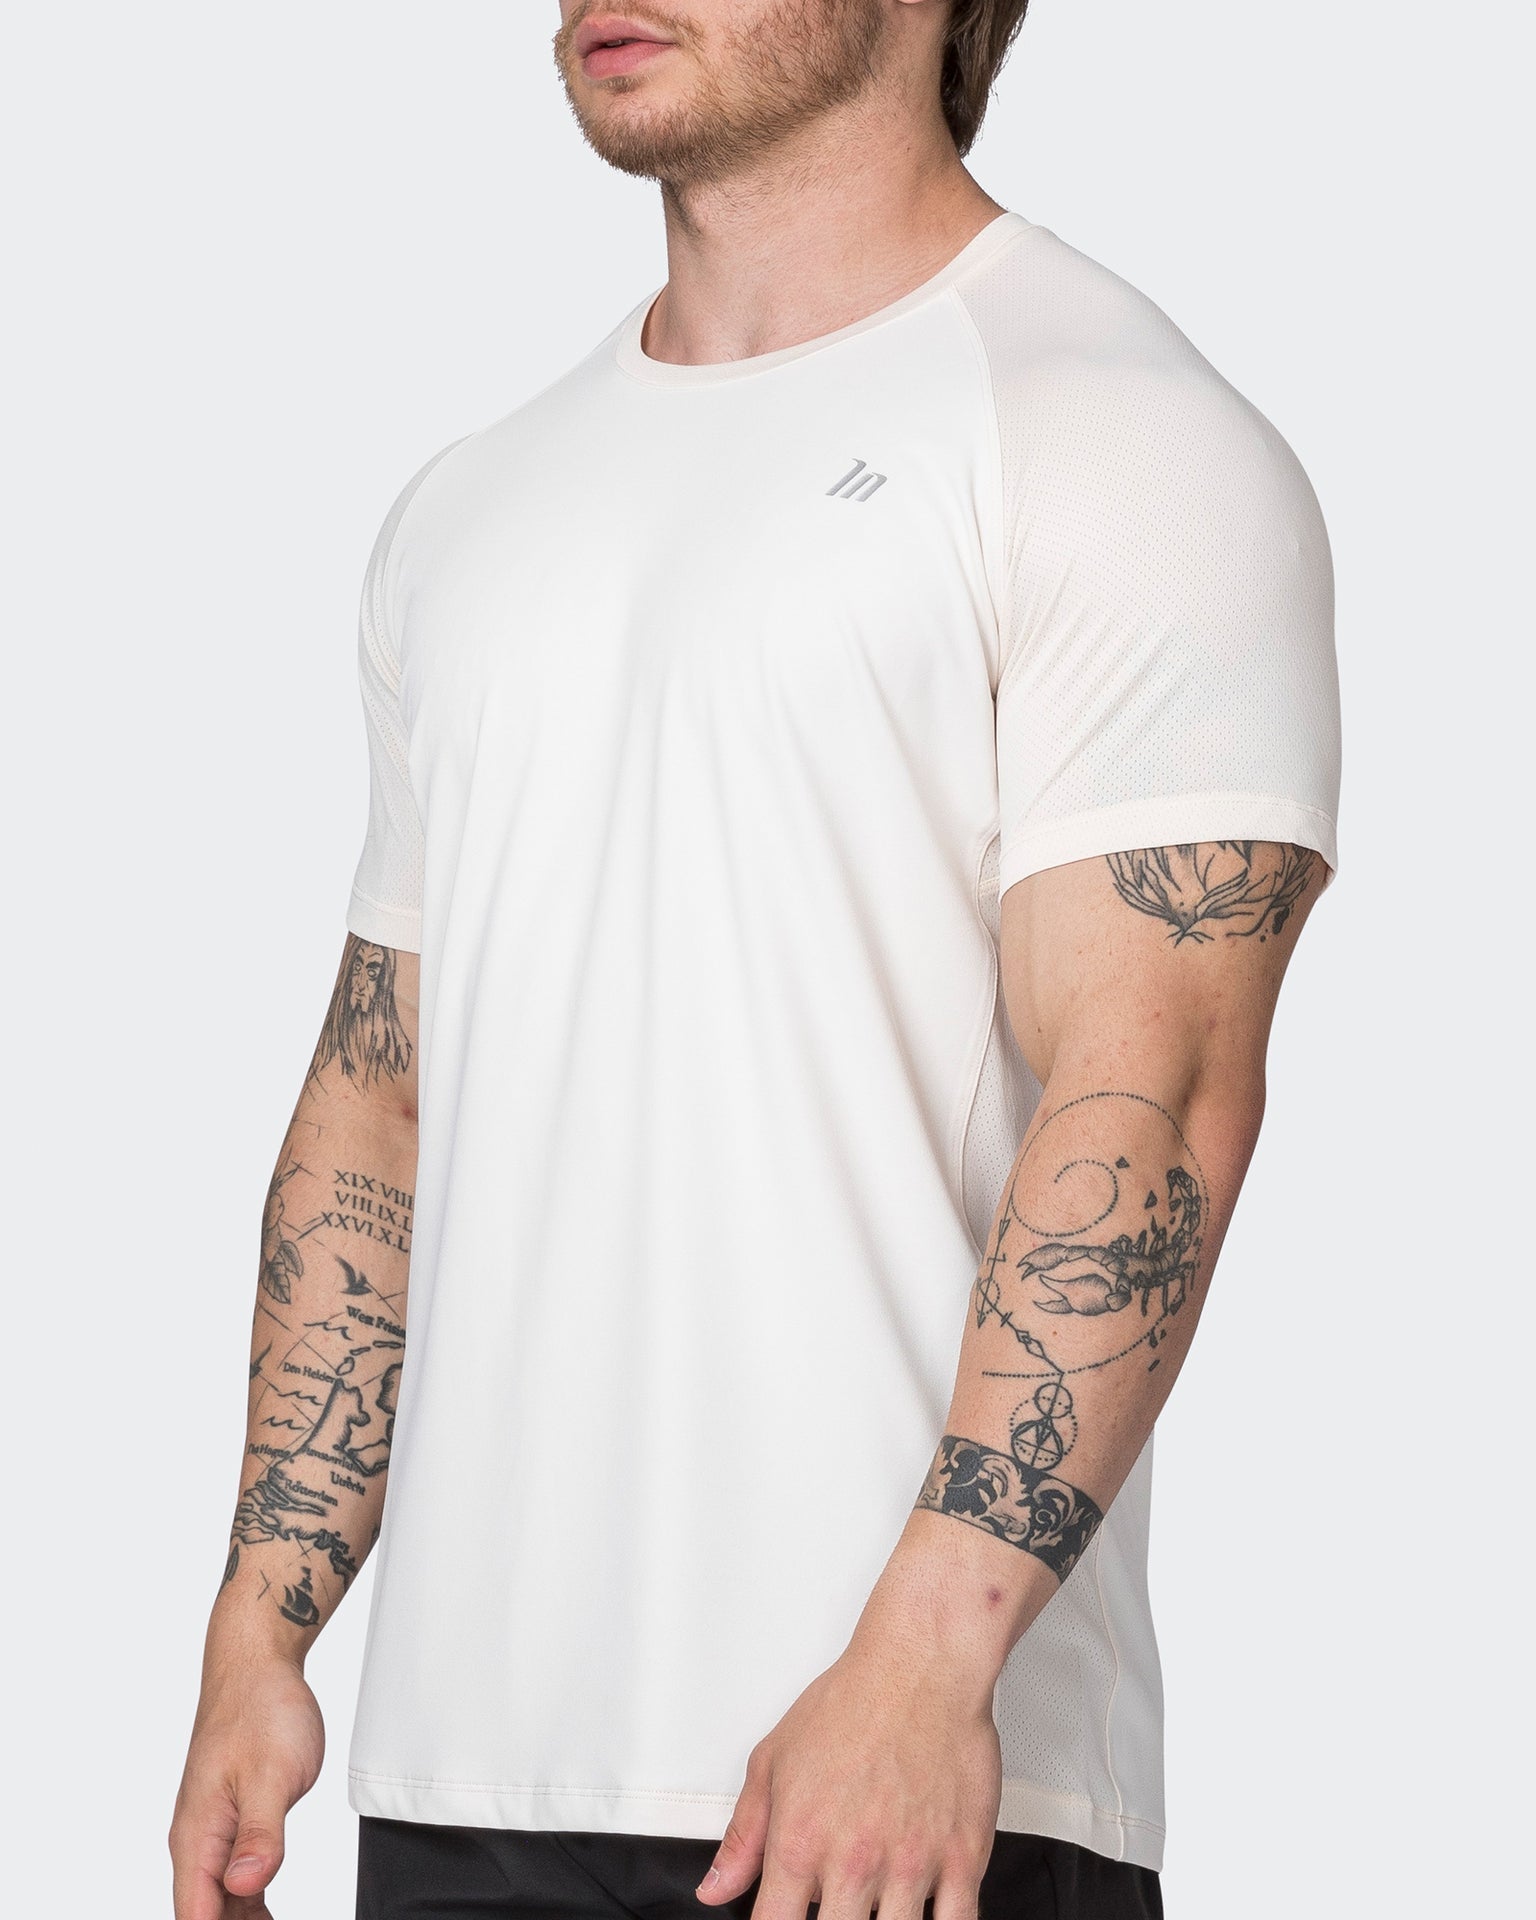 Muscle Nation T-Shirts Ventilation Tee - Travertine